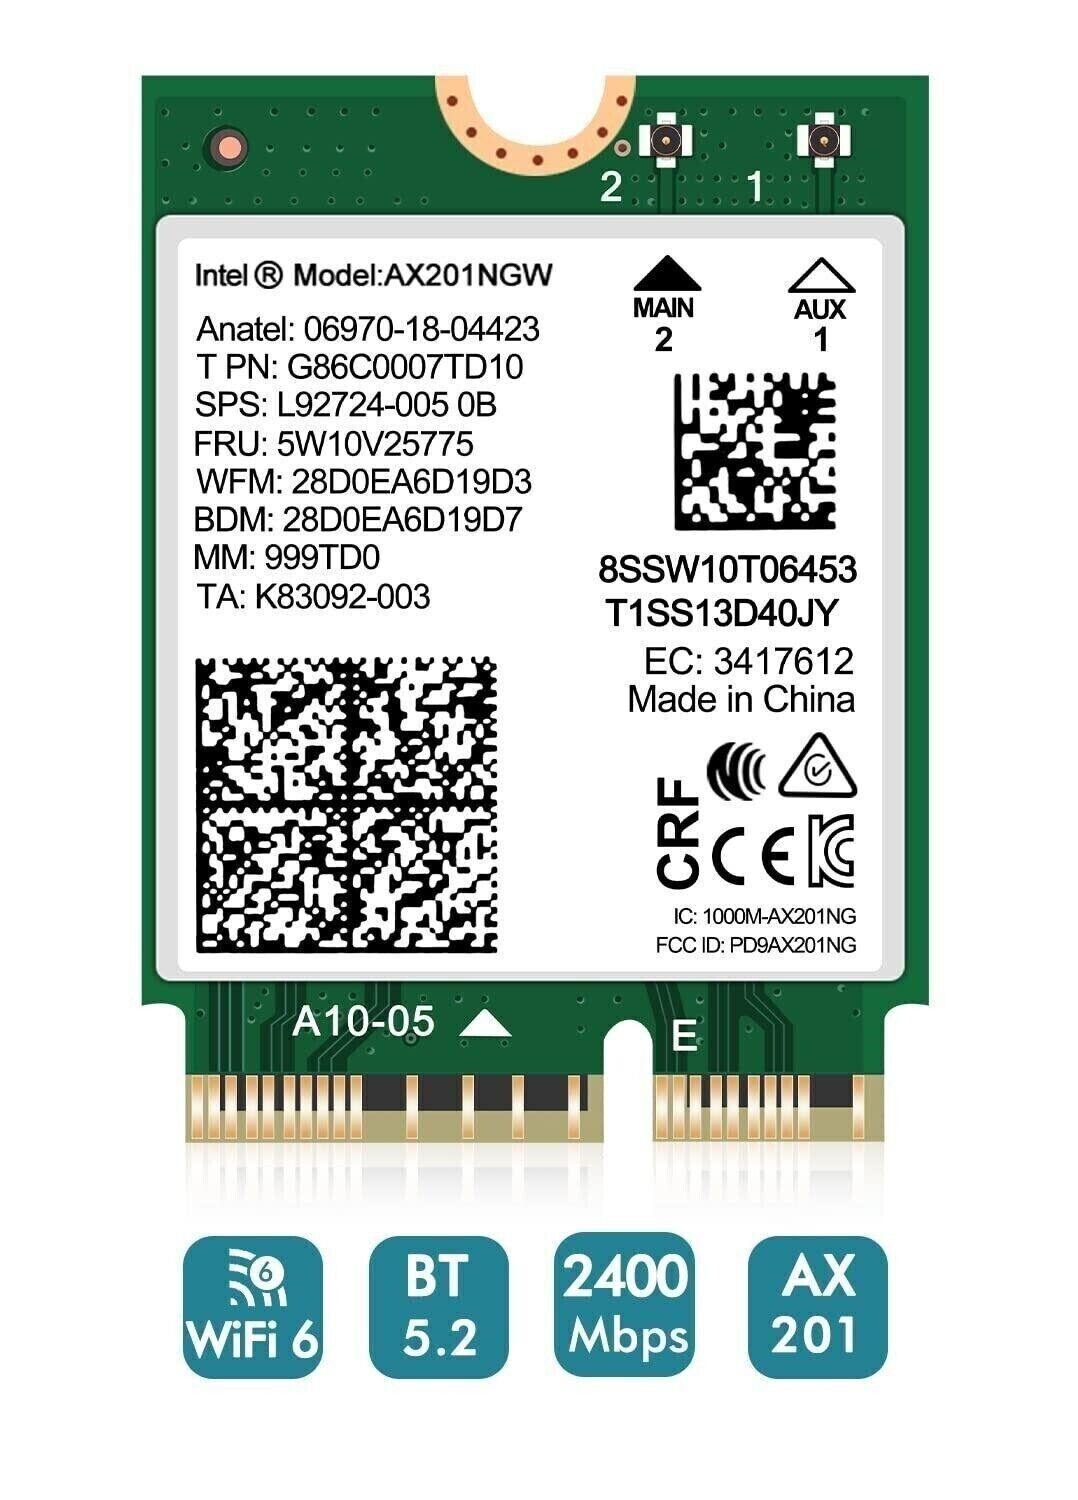 LOT of 10 - INTEL AX201NGW L92724-005 GENUINE HP WIRELESS CARDS